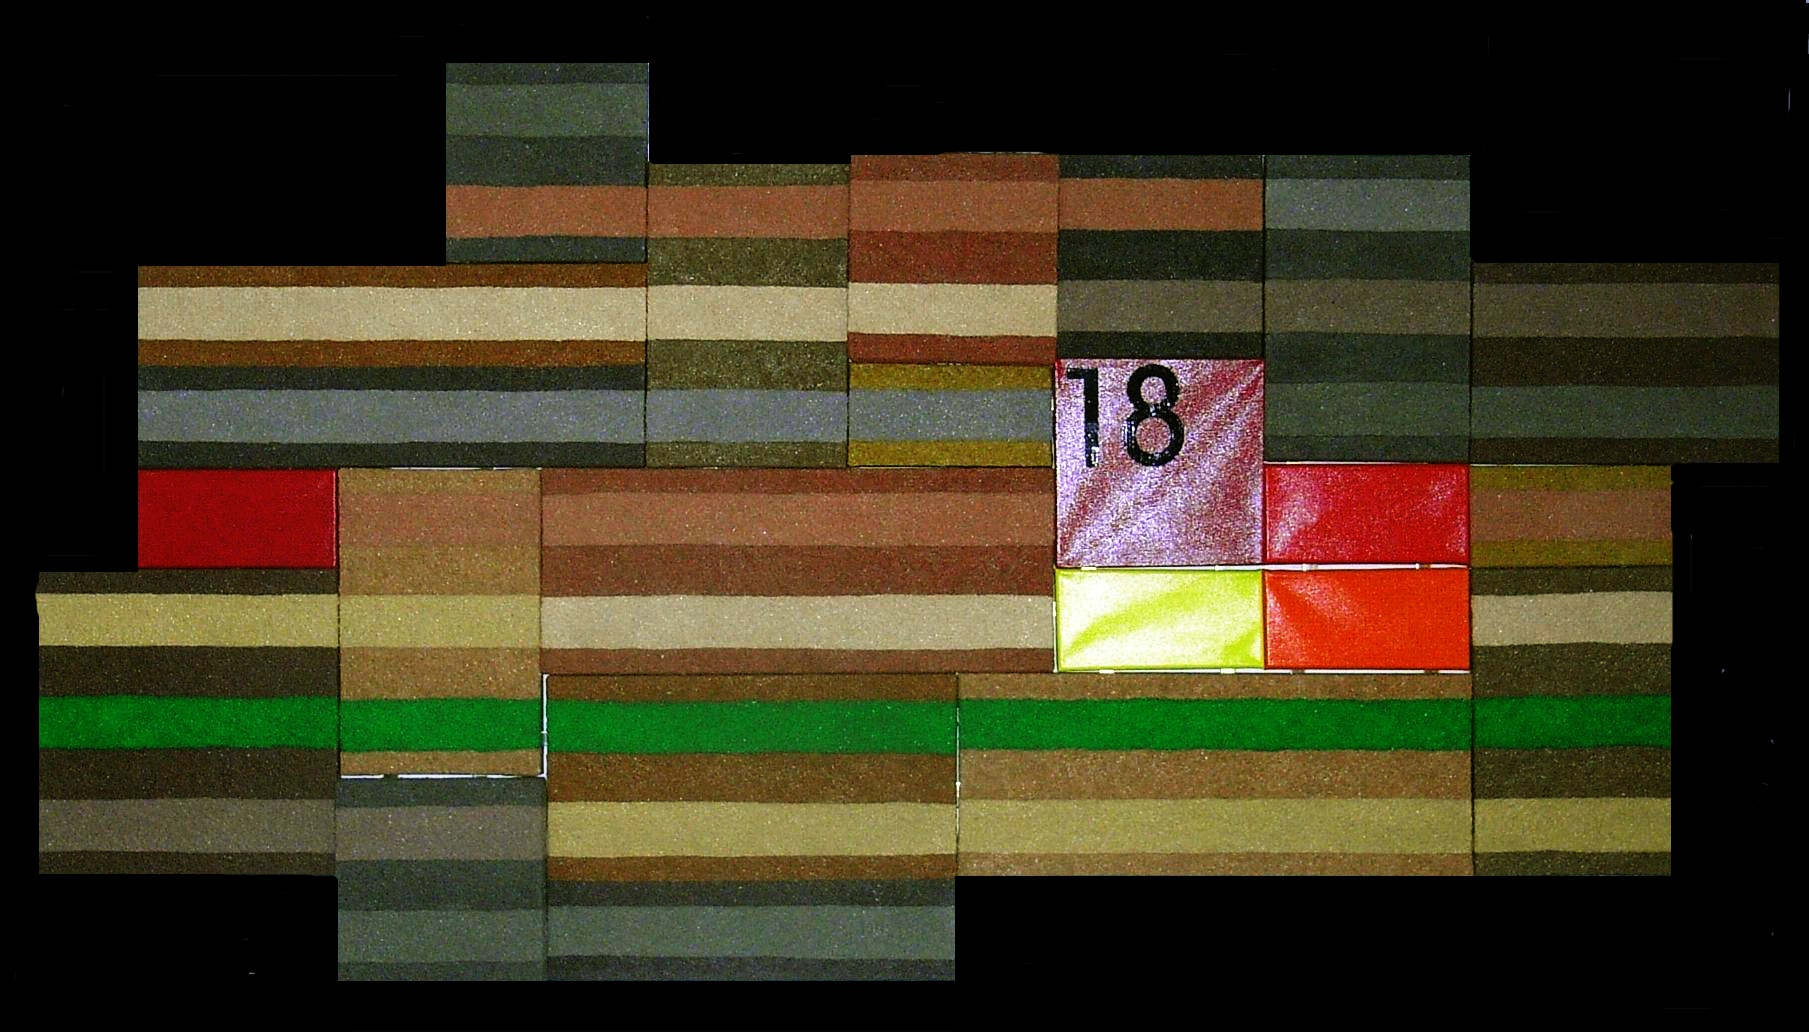 Grundstück und Haus Nr. 18 am grünen Senf Weg |  2011  |  Acryl, Senf, Mohn, Sand  |  montiert aus 20 Teilbildern  |  160x90 cm